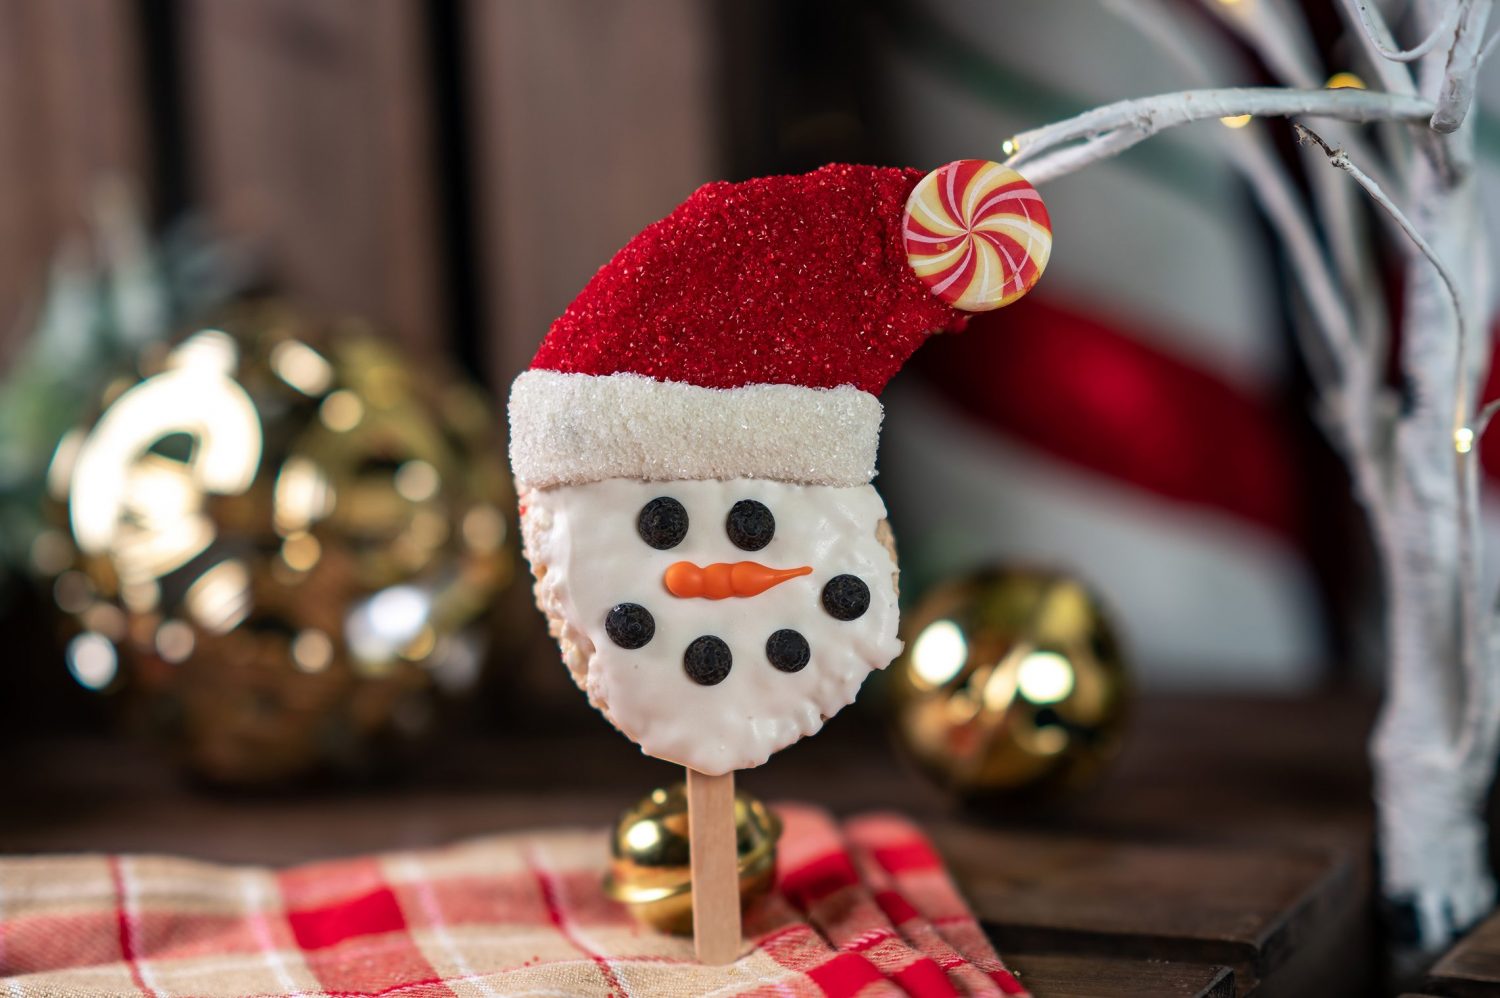 Snowman Marshmallow Hot Cocoa Toppers - The Suburban Soapbox